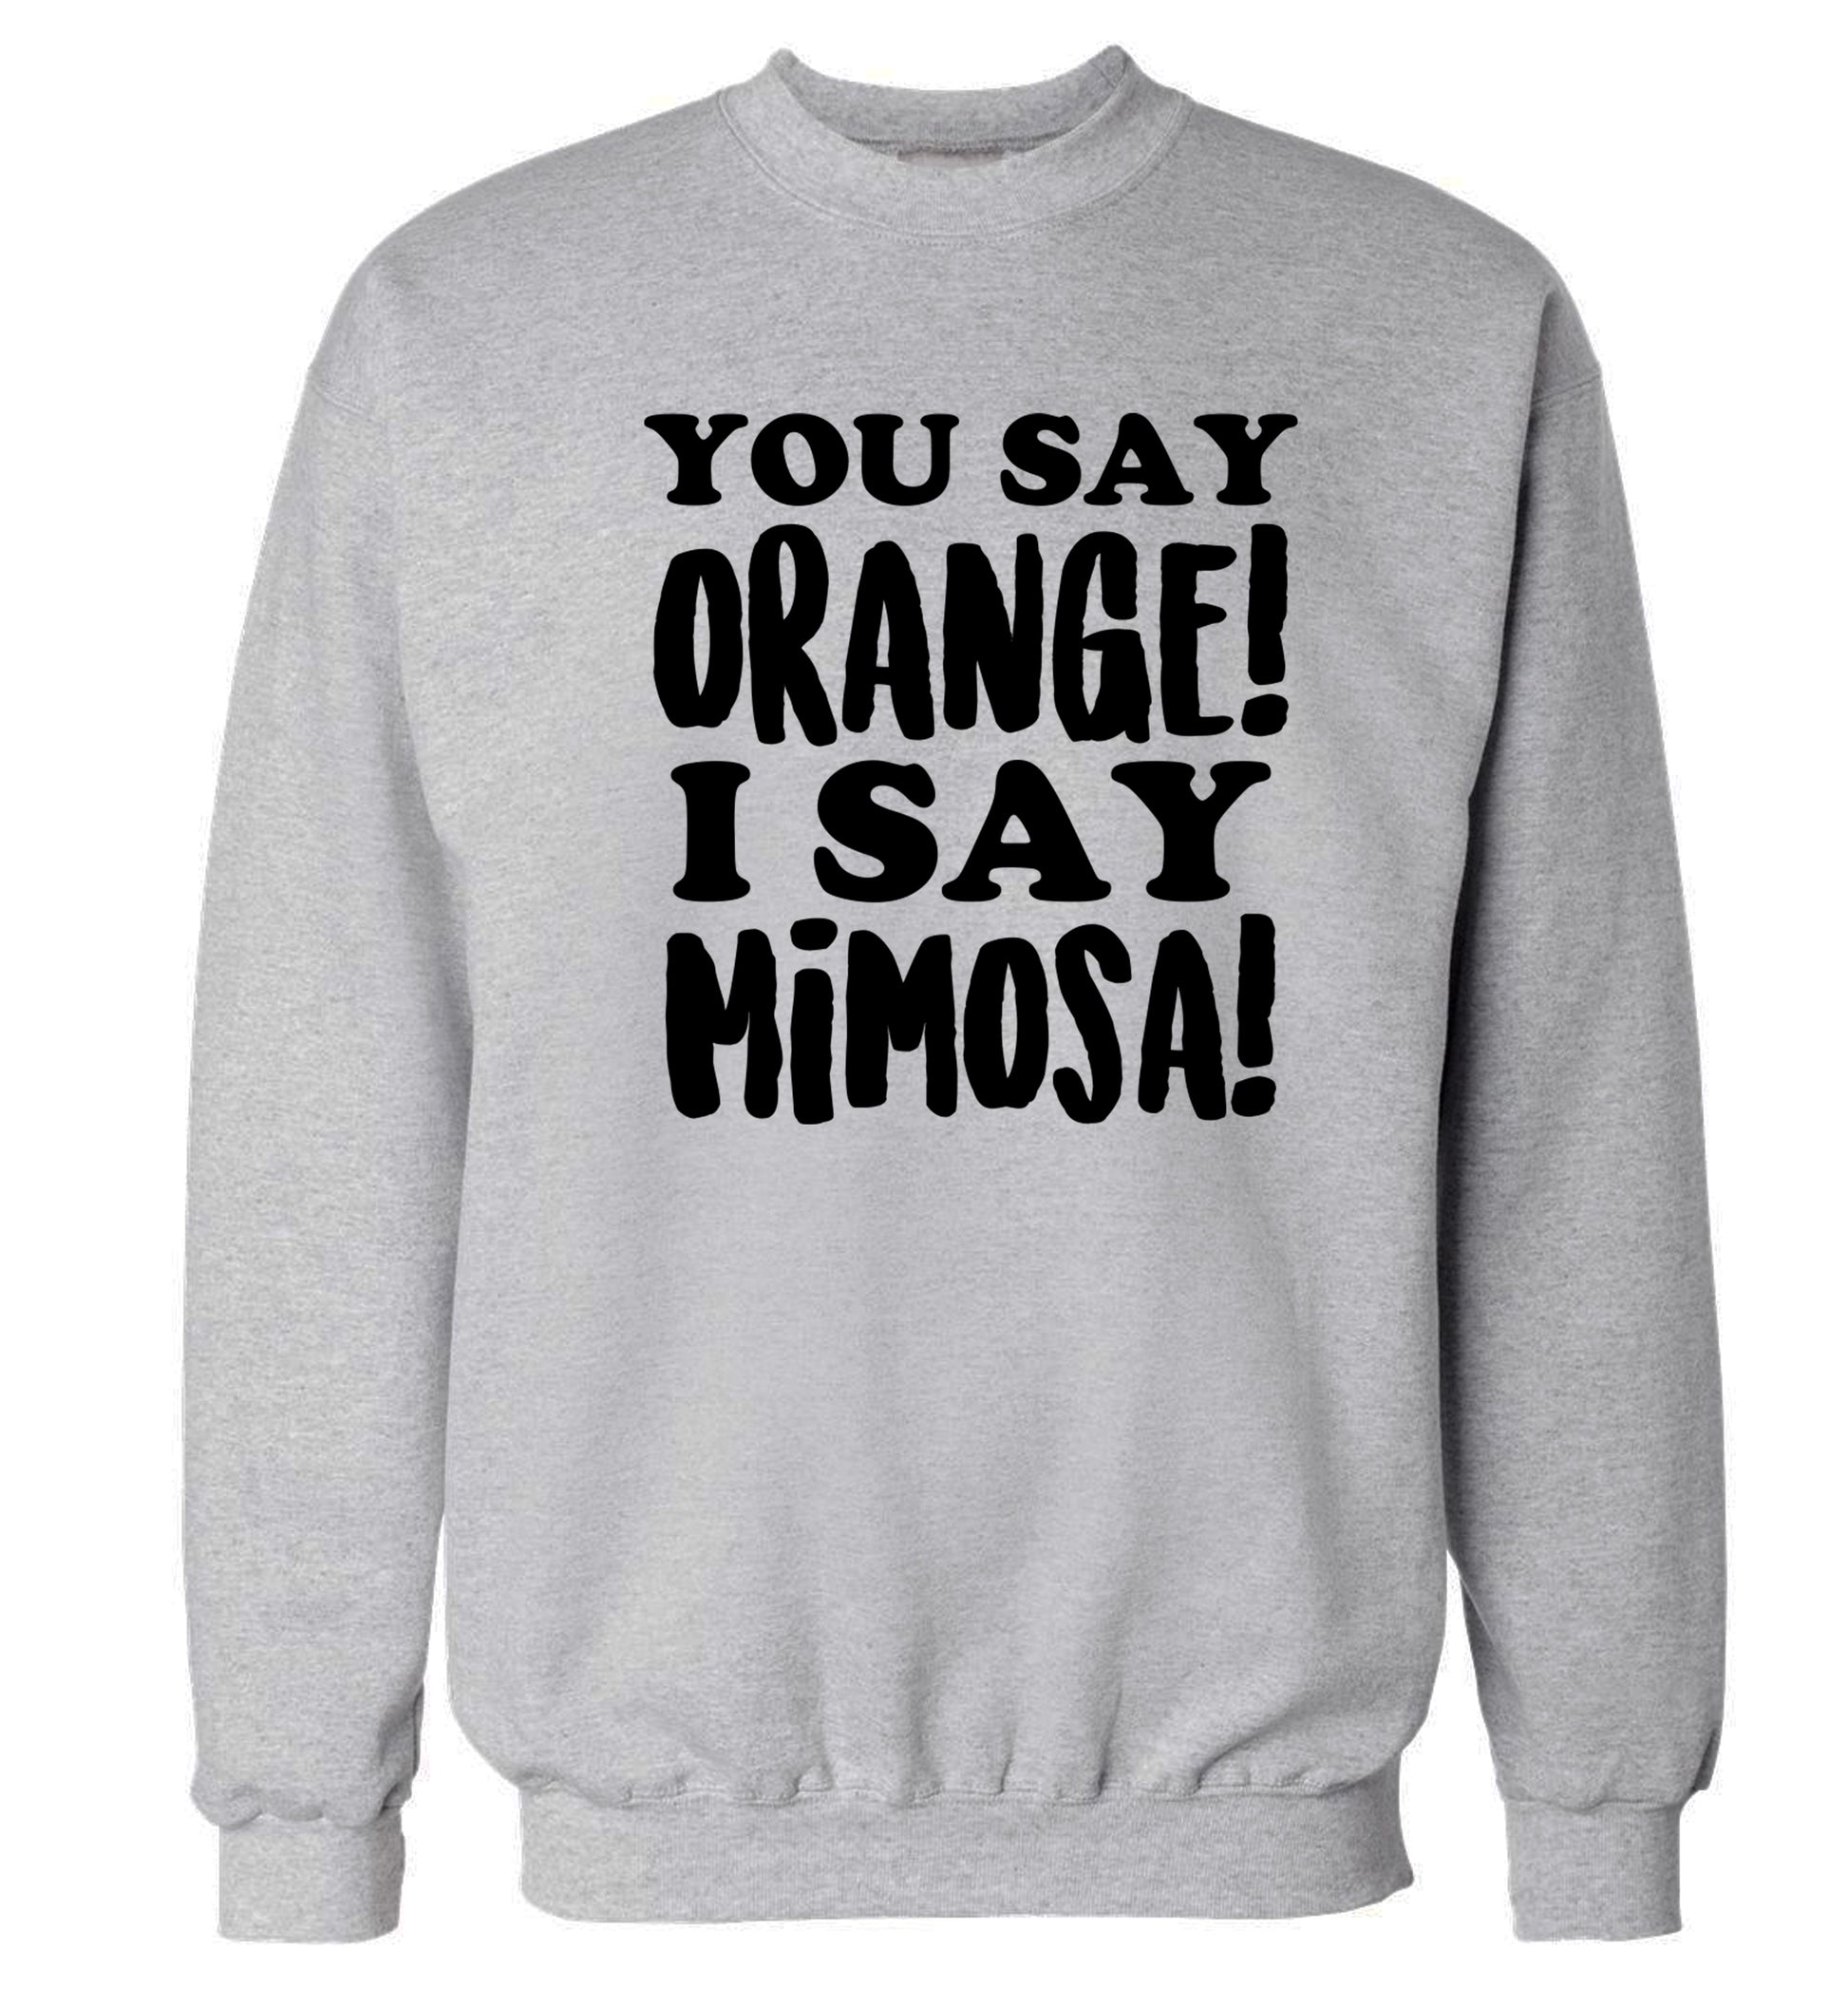 You say orange I say mimosa! Adult's unisex grey Sweater 2XL